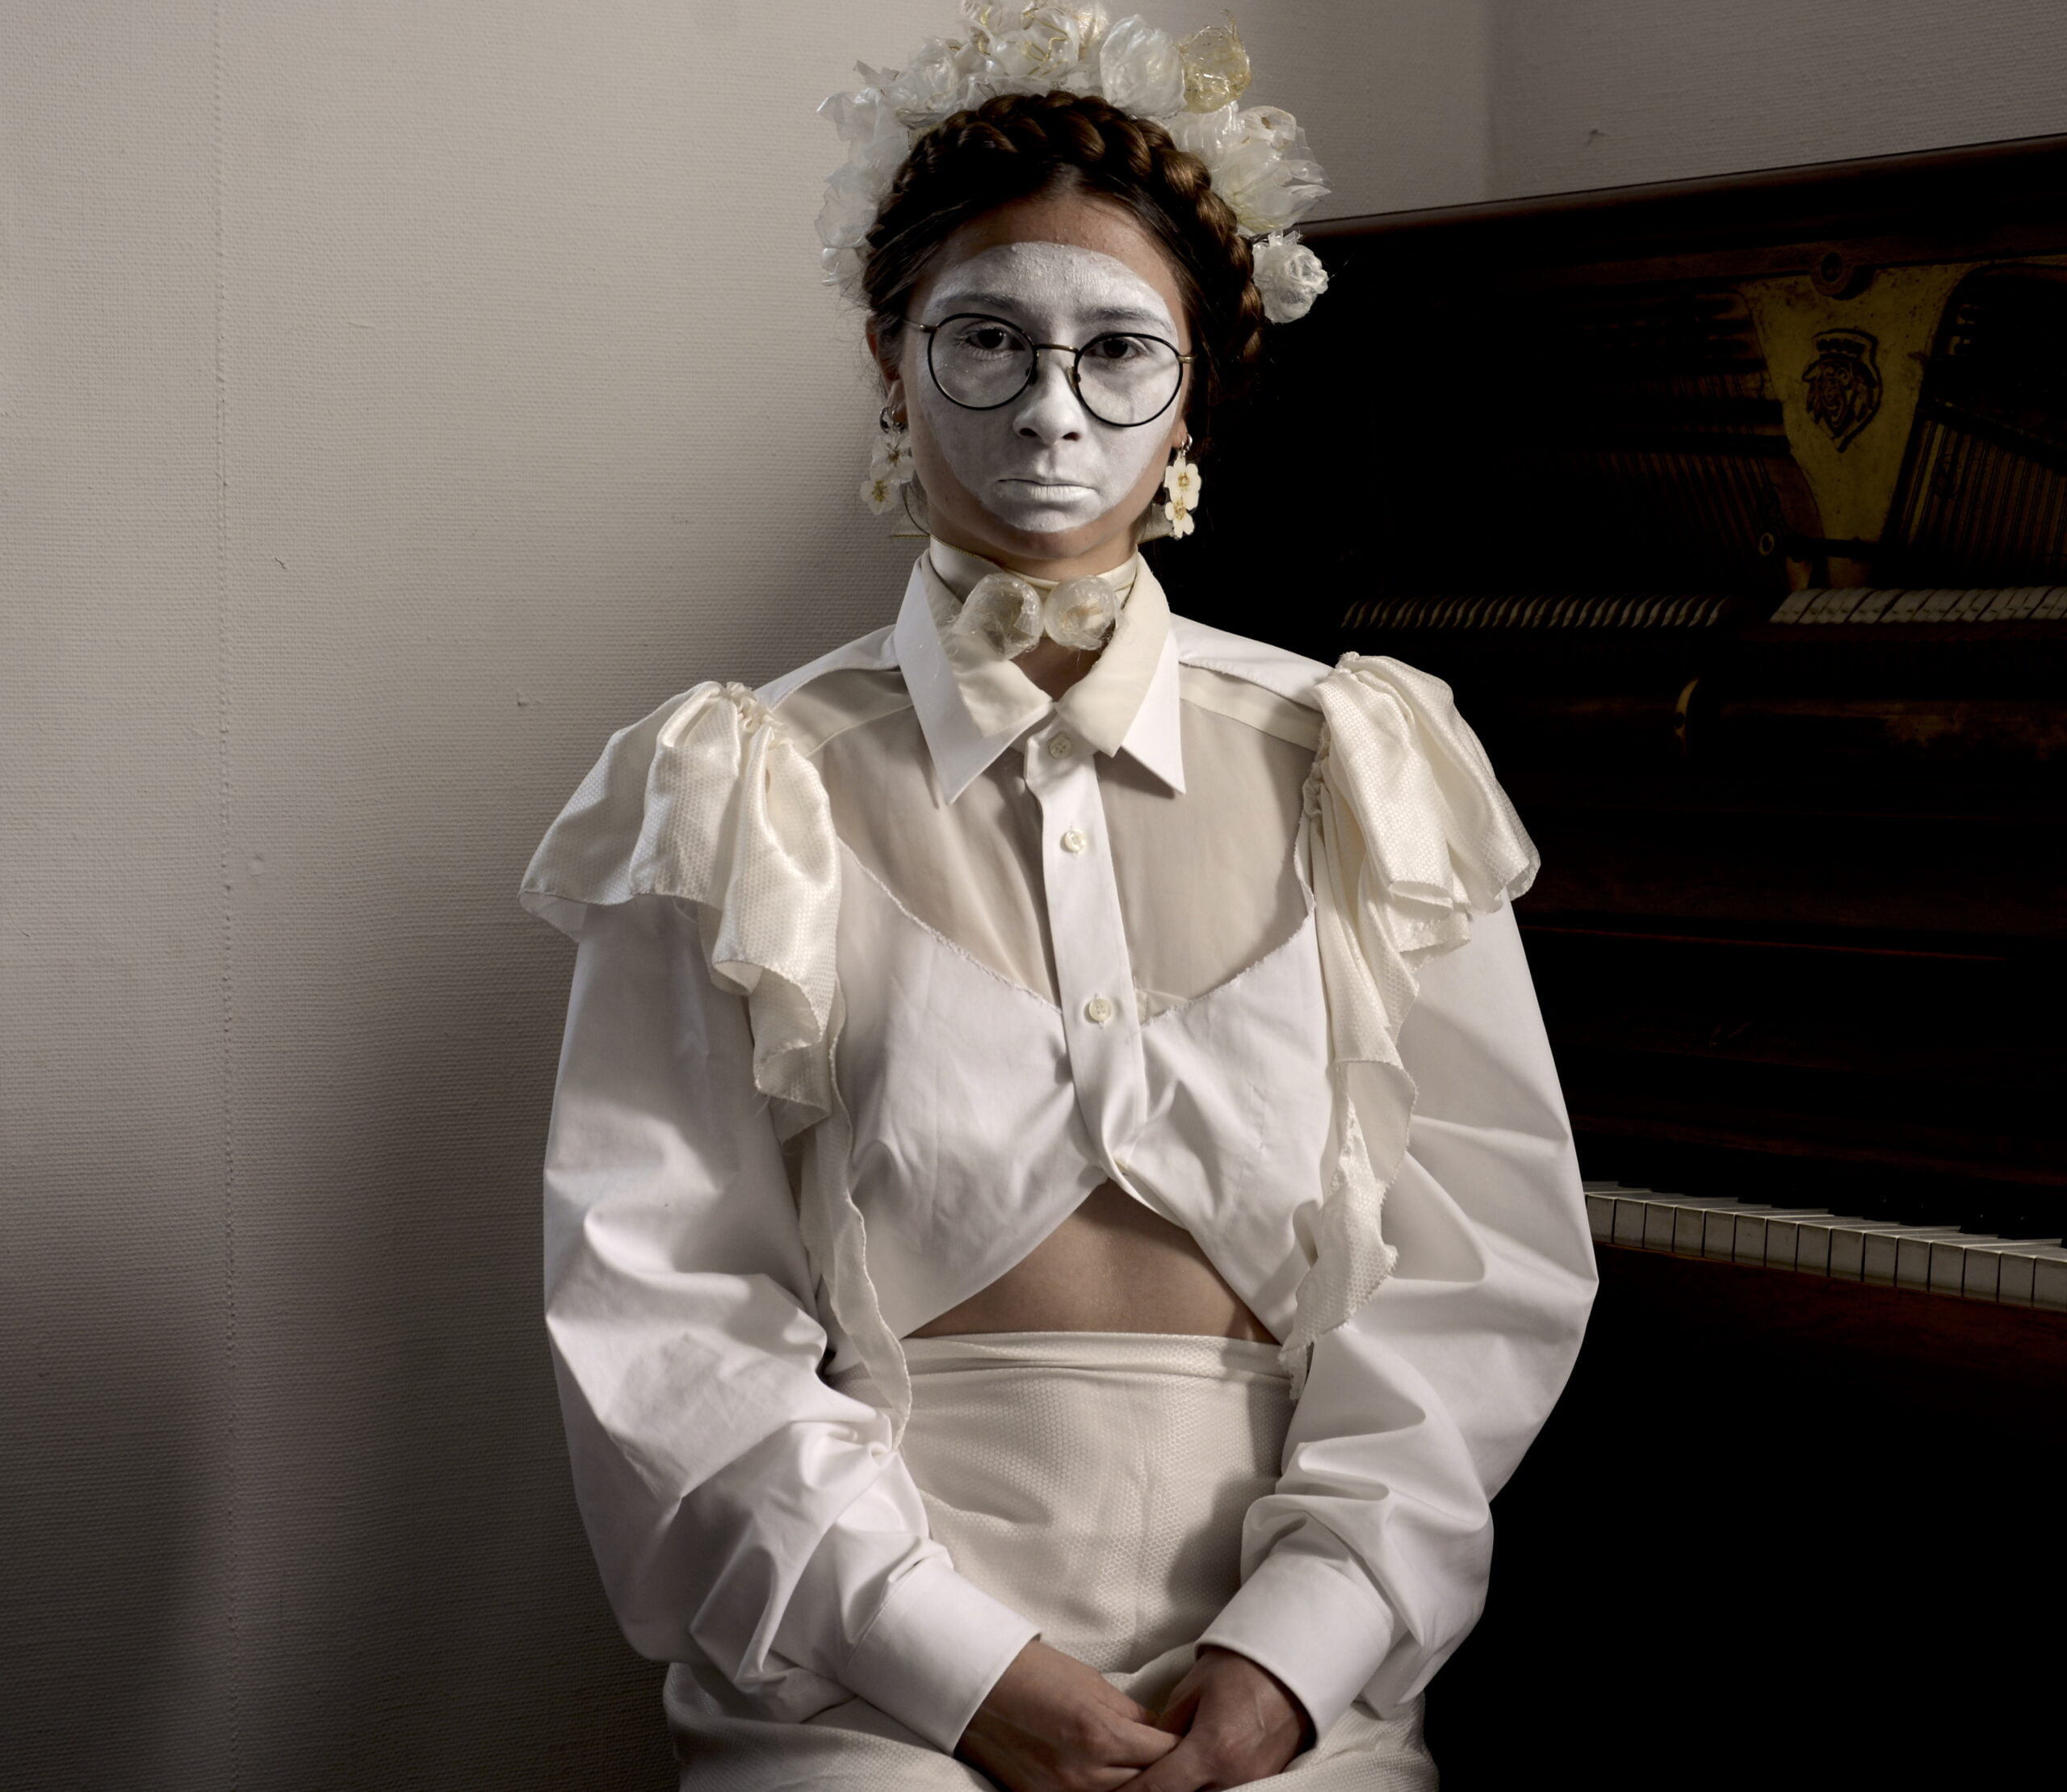 piano portrait taken by Pernille Lindkvist